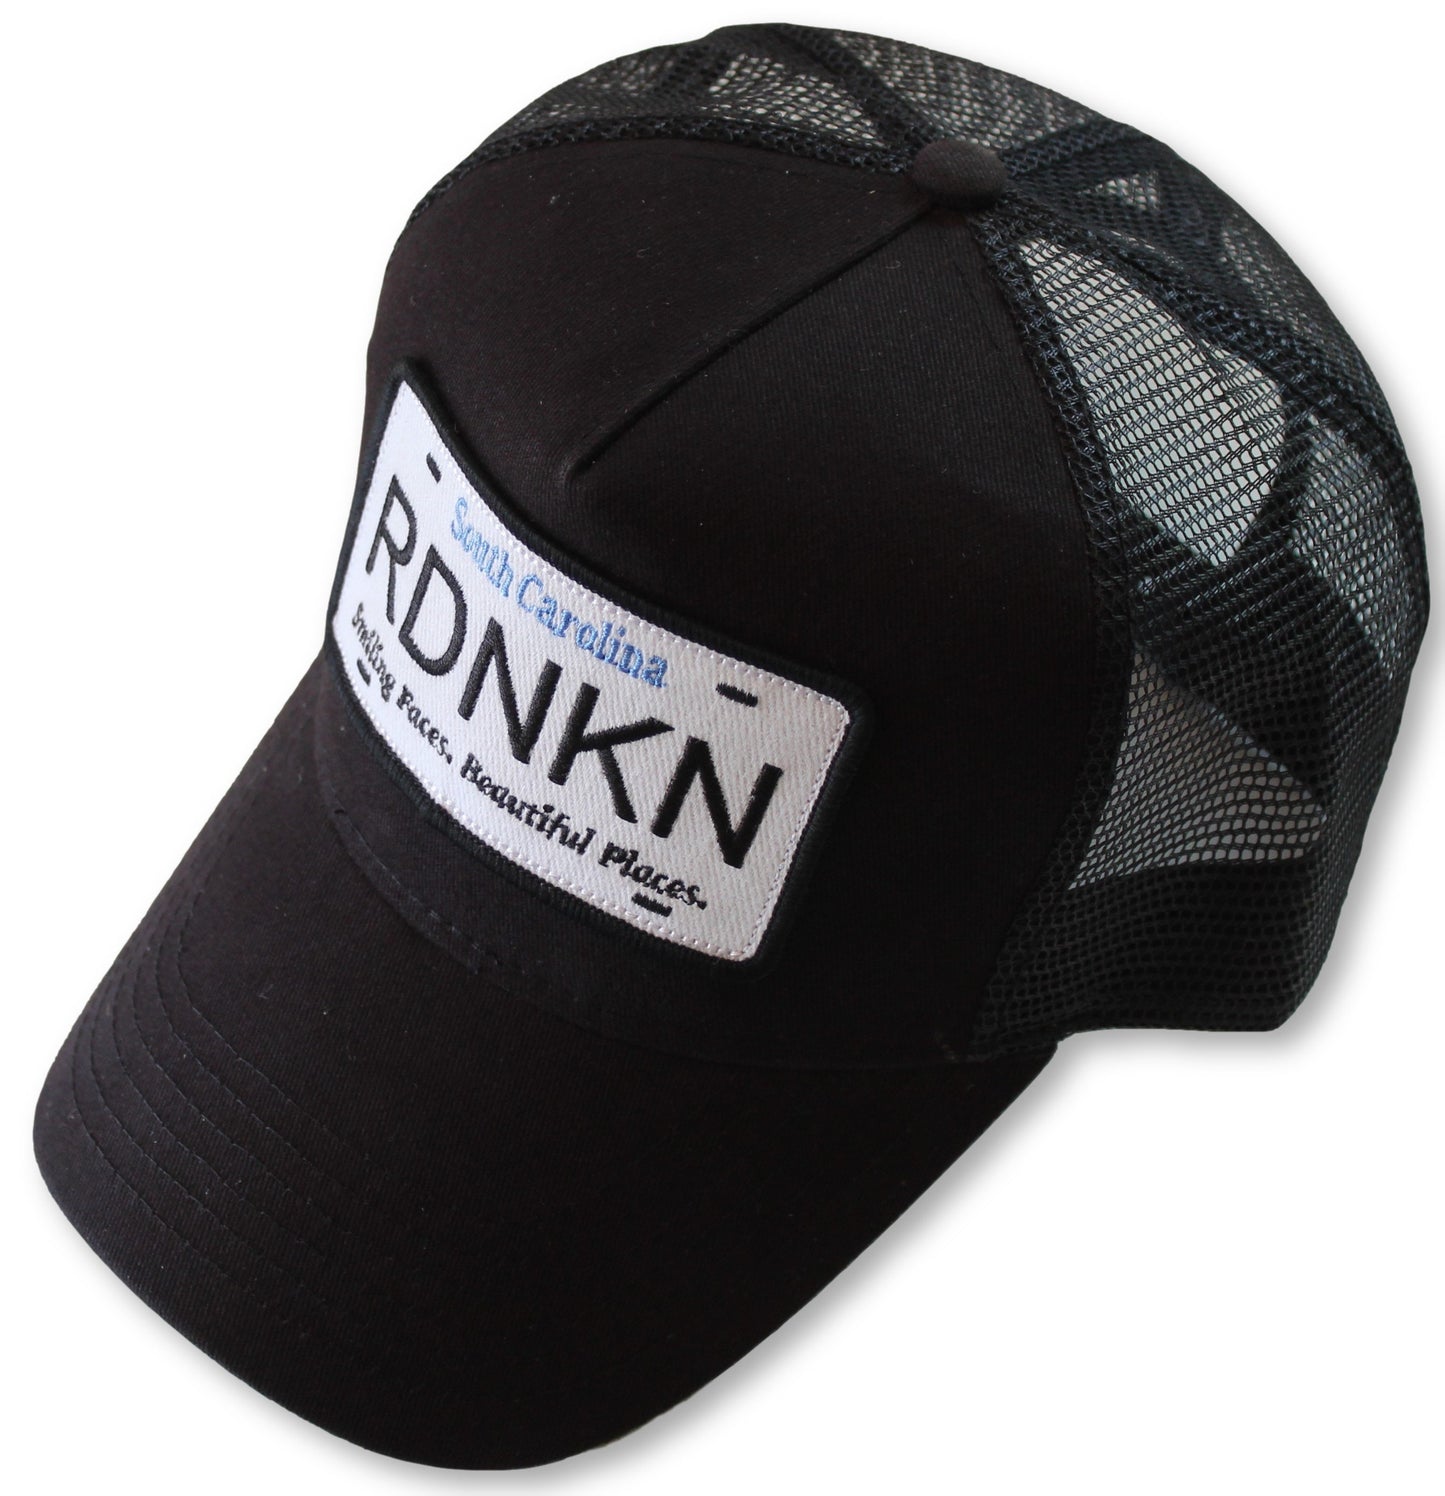 South Carolina RDNKN Mesh Snapback Trucker hat